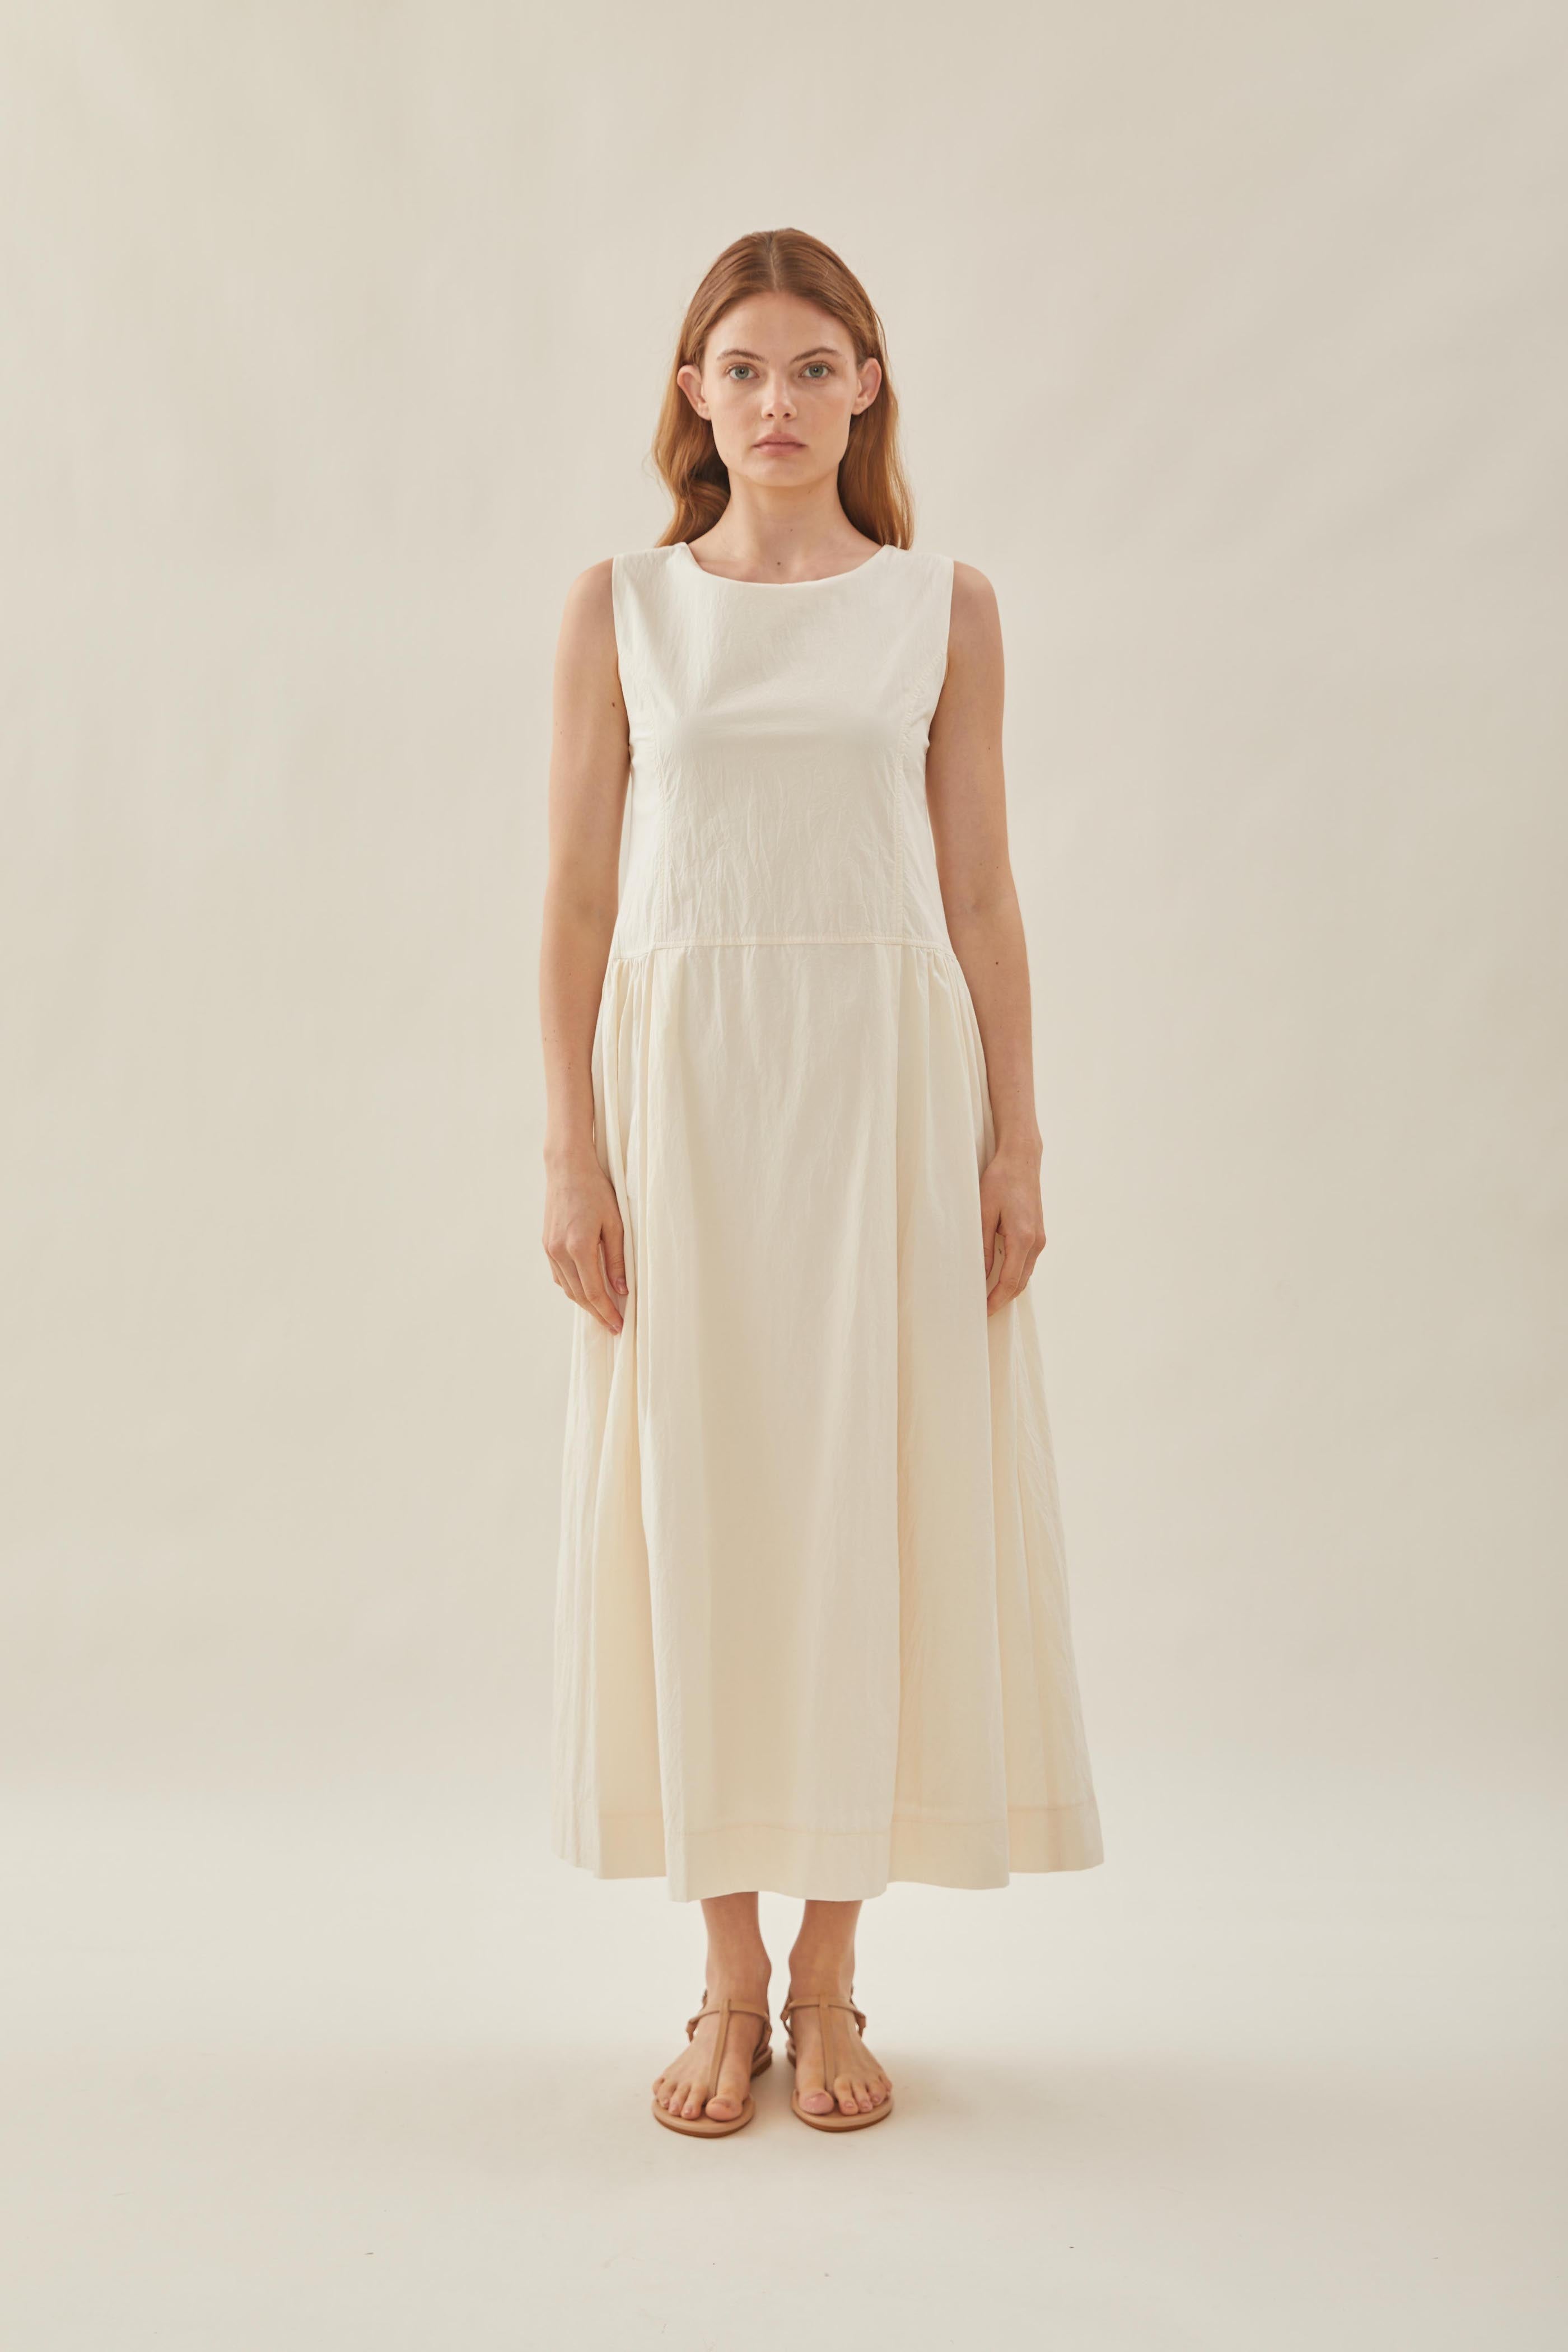 Cotton Poplin Sleeveless Dress in Natural